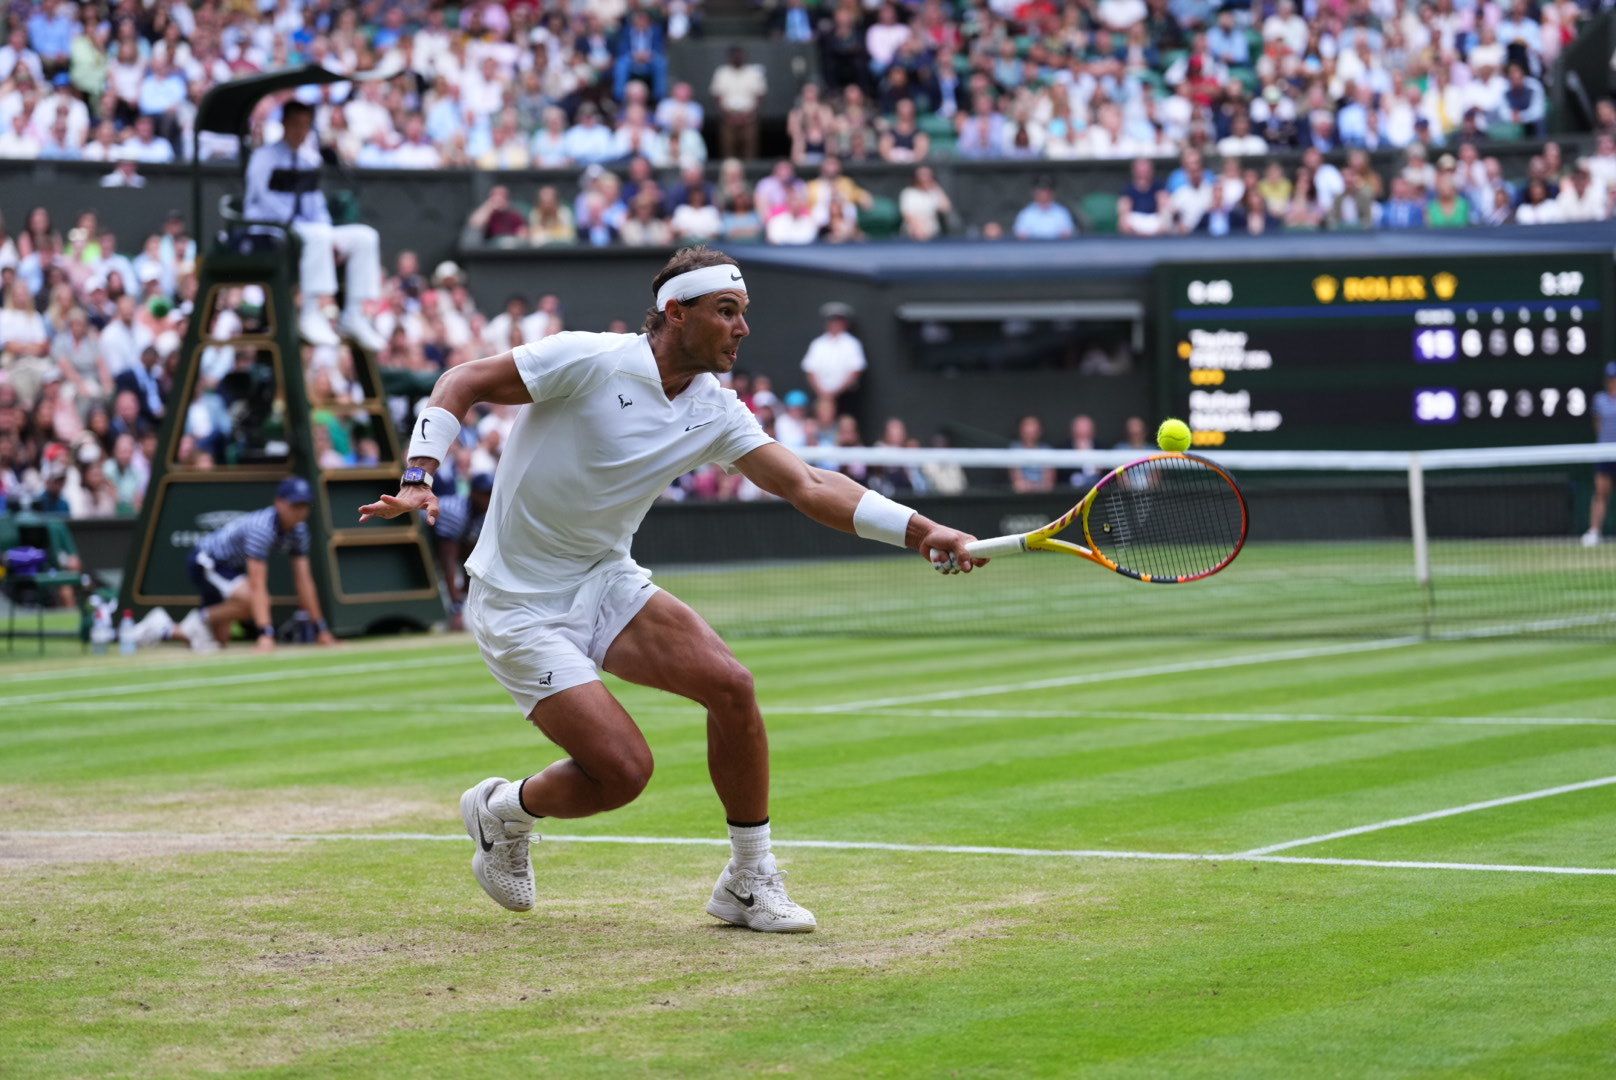 With 7 mm abdominal tear, Rafael Nadal’s Wimbledon hopes hang by a thread